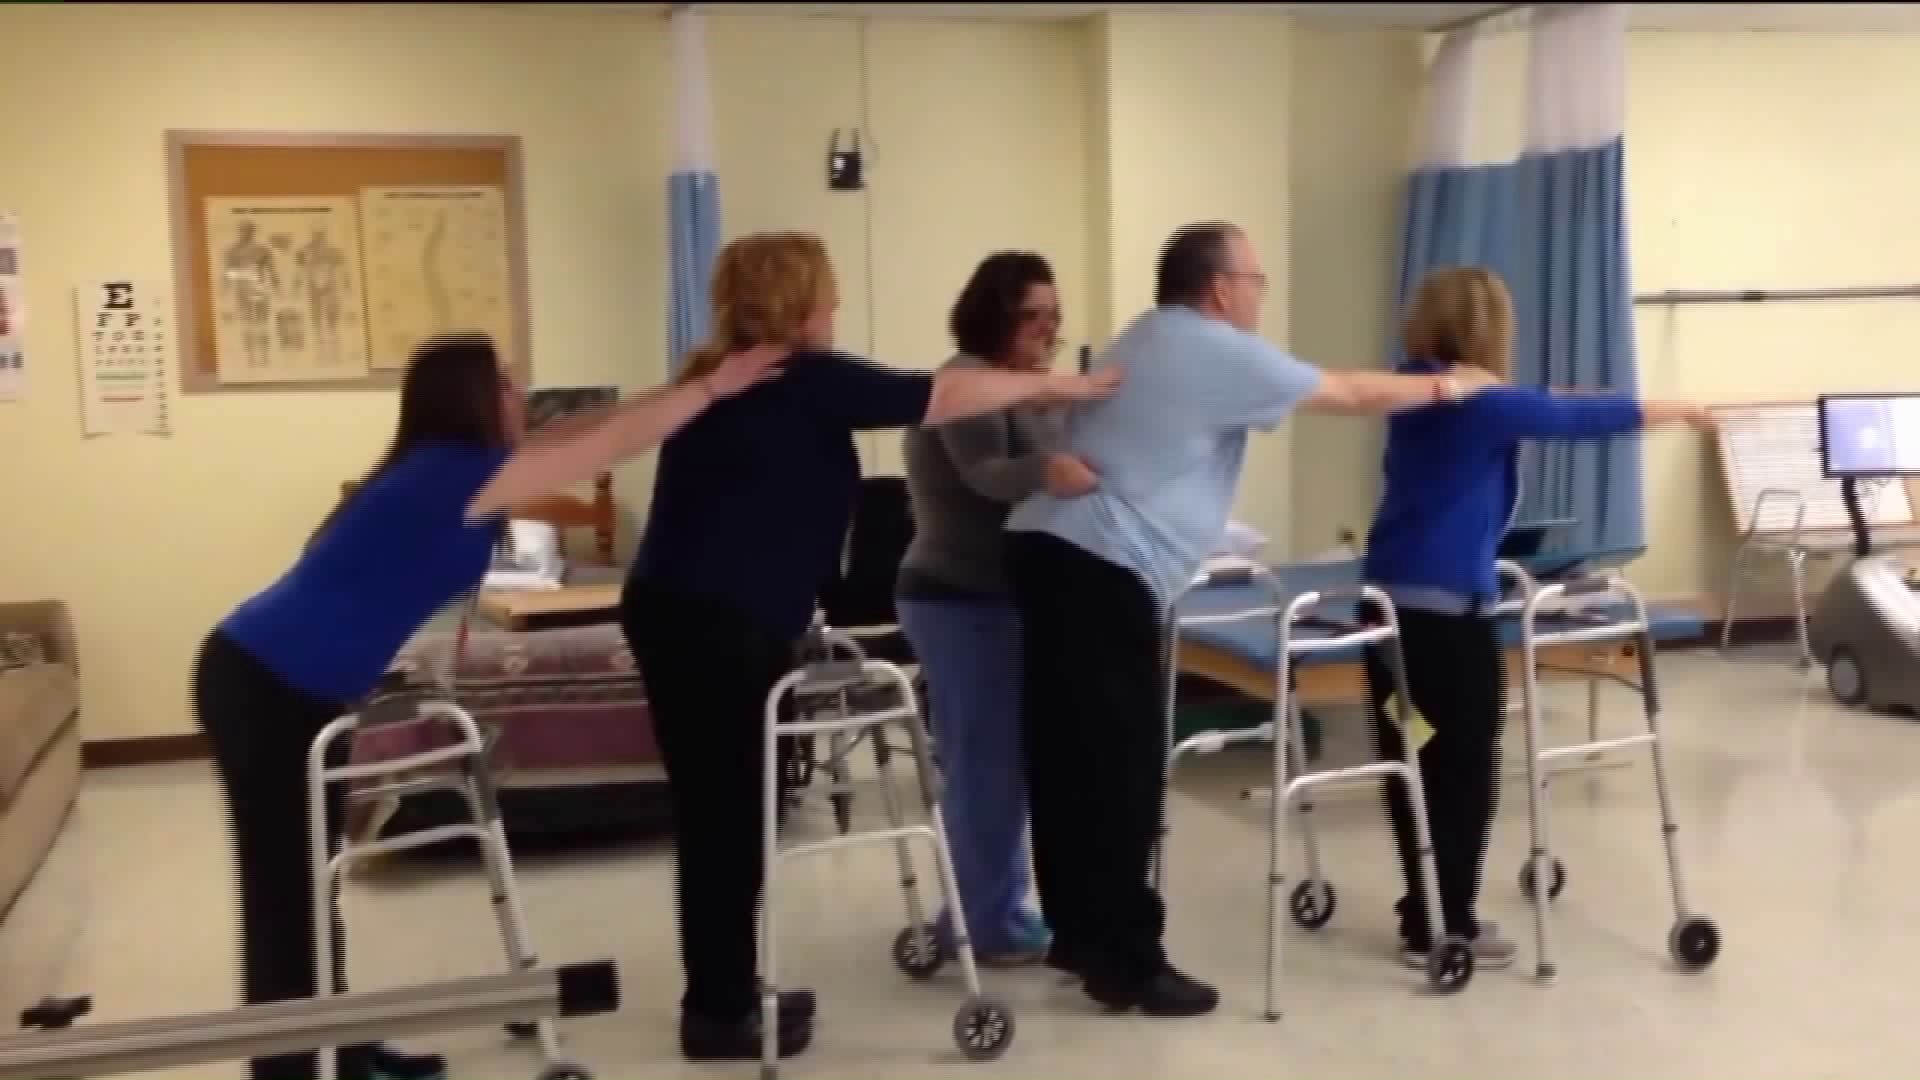 Healthwatch 16: Dancing Their Way Through Rehab